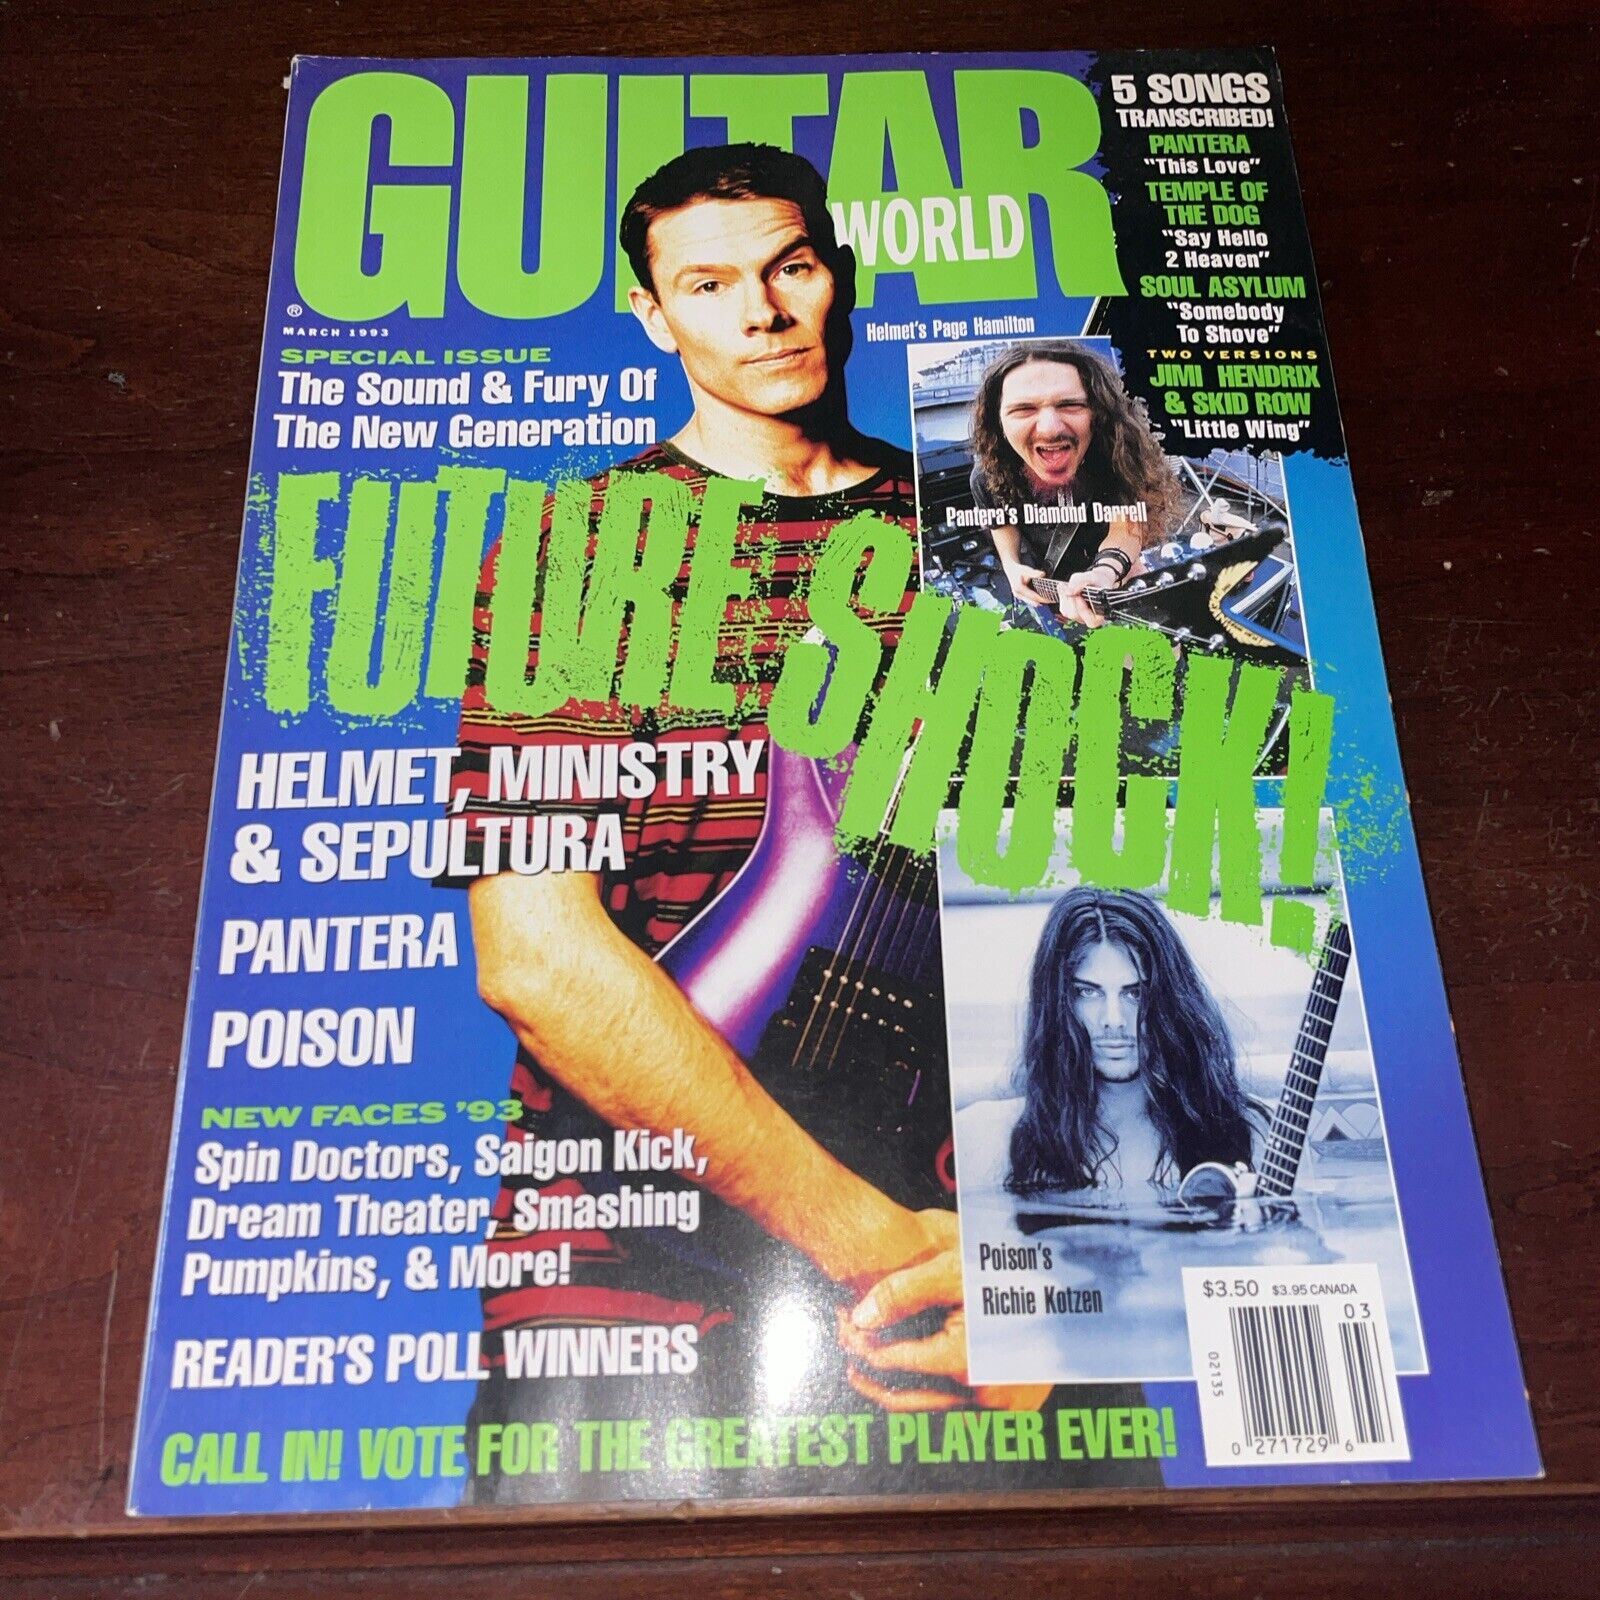 MARCH 1993 GUITAR WORLD vintage music magazine FUTURE SHOCK - PANTERA